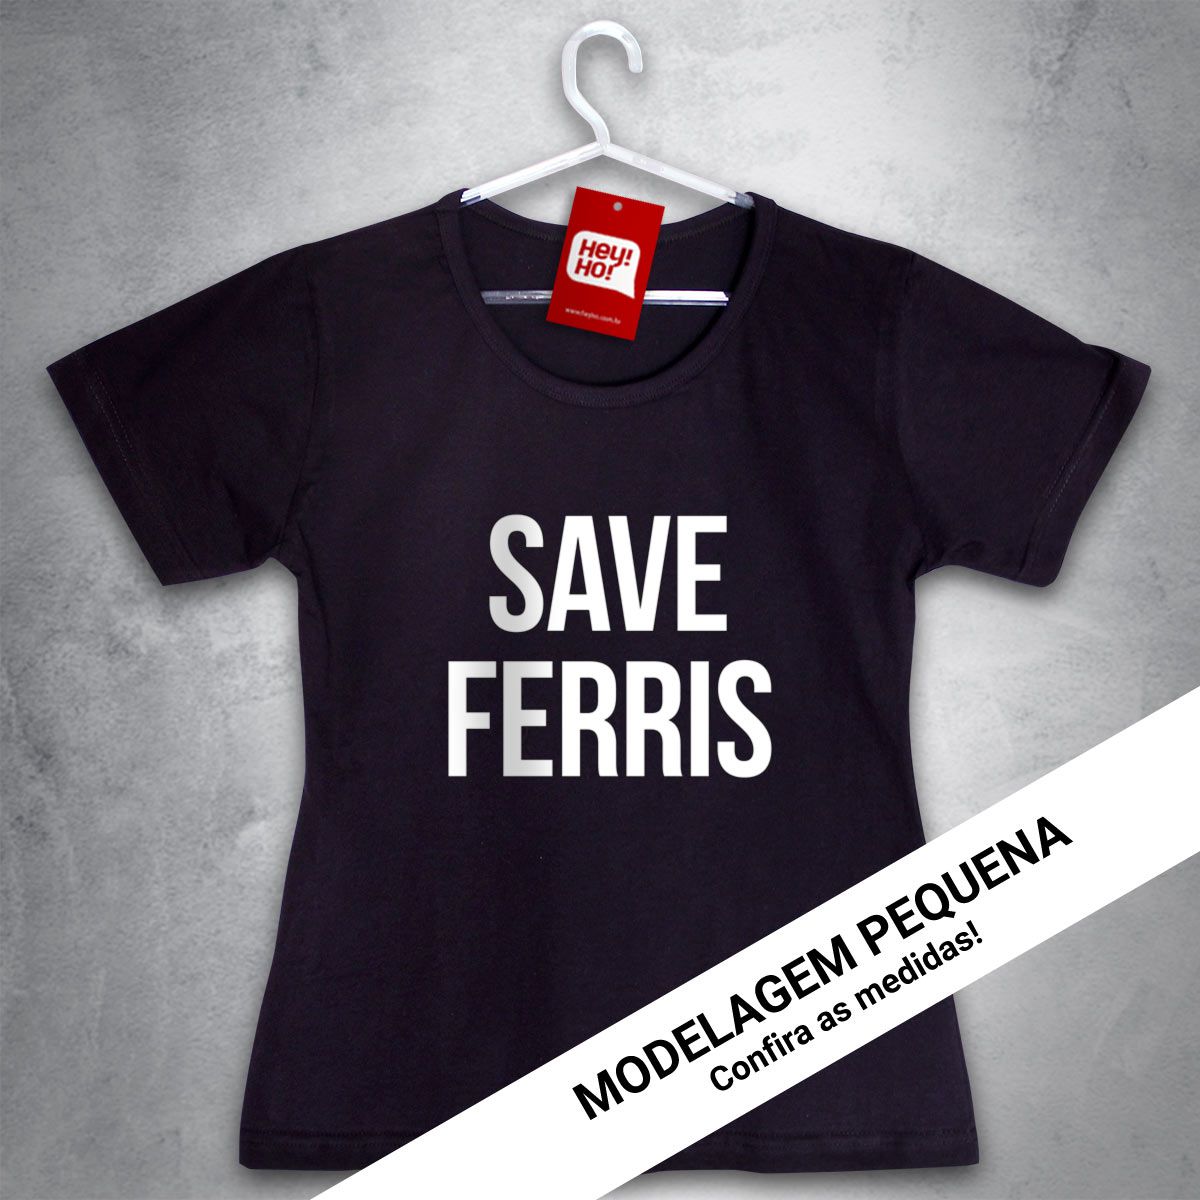 OFERTA - FERRIS BUELLER'S DAY OFF  Save Ferris - Baby Look Preta - Tamanho P